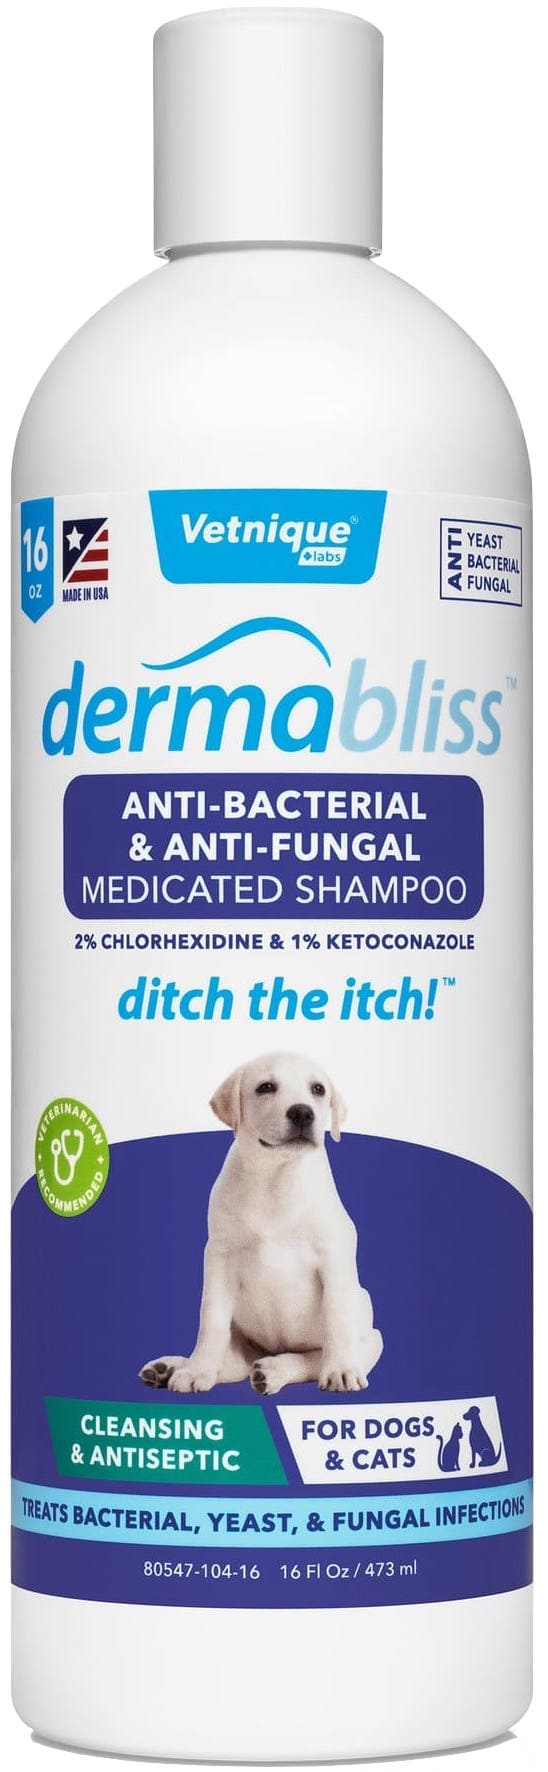 Dermabliss Anti-Bacterial & Anti-Fungal Shampoo